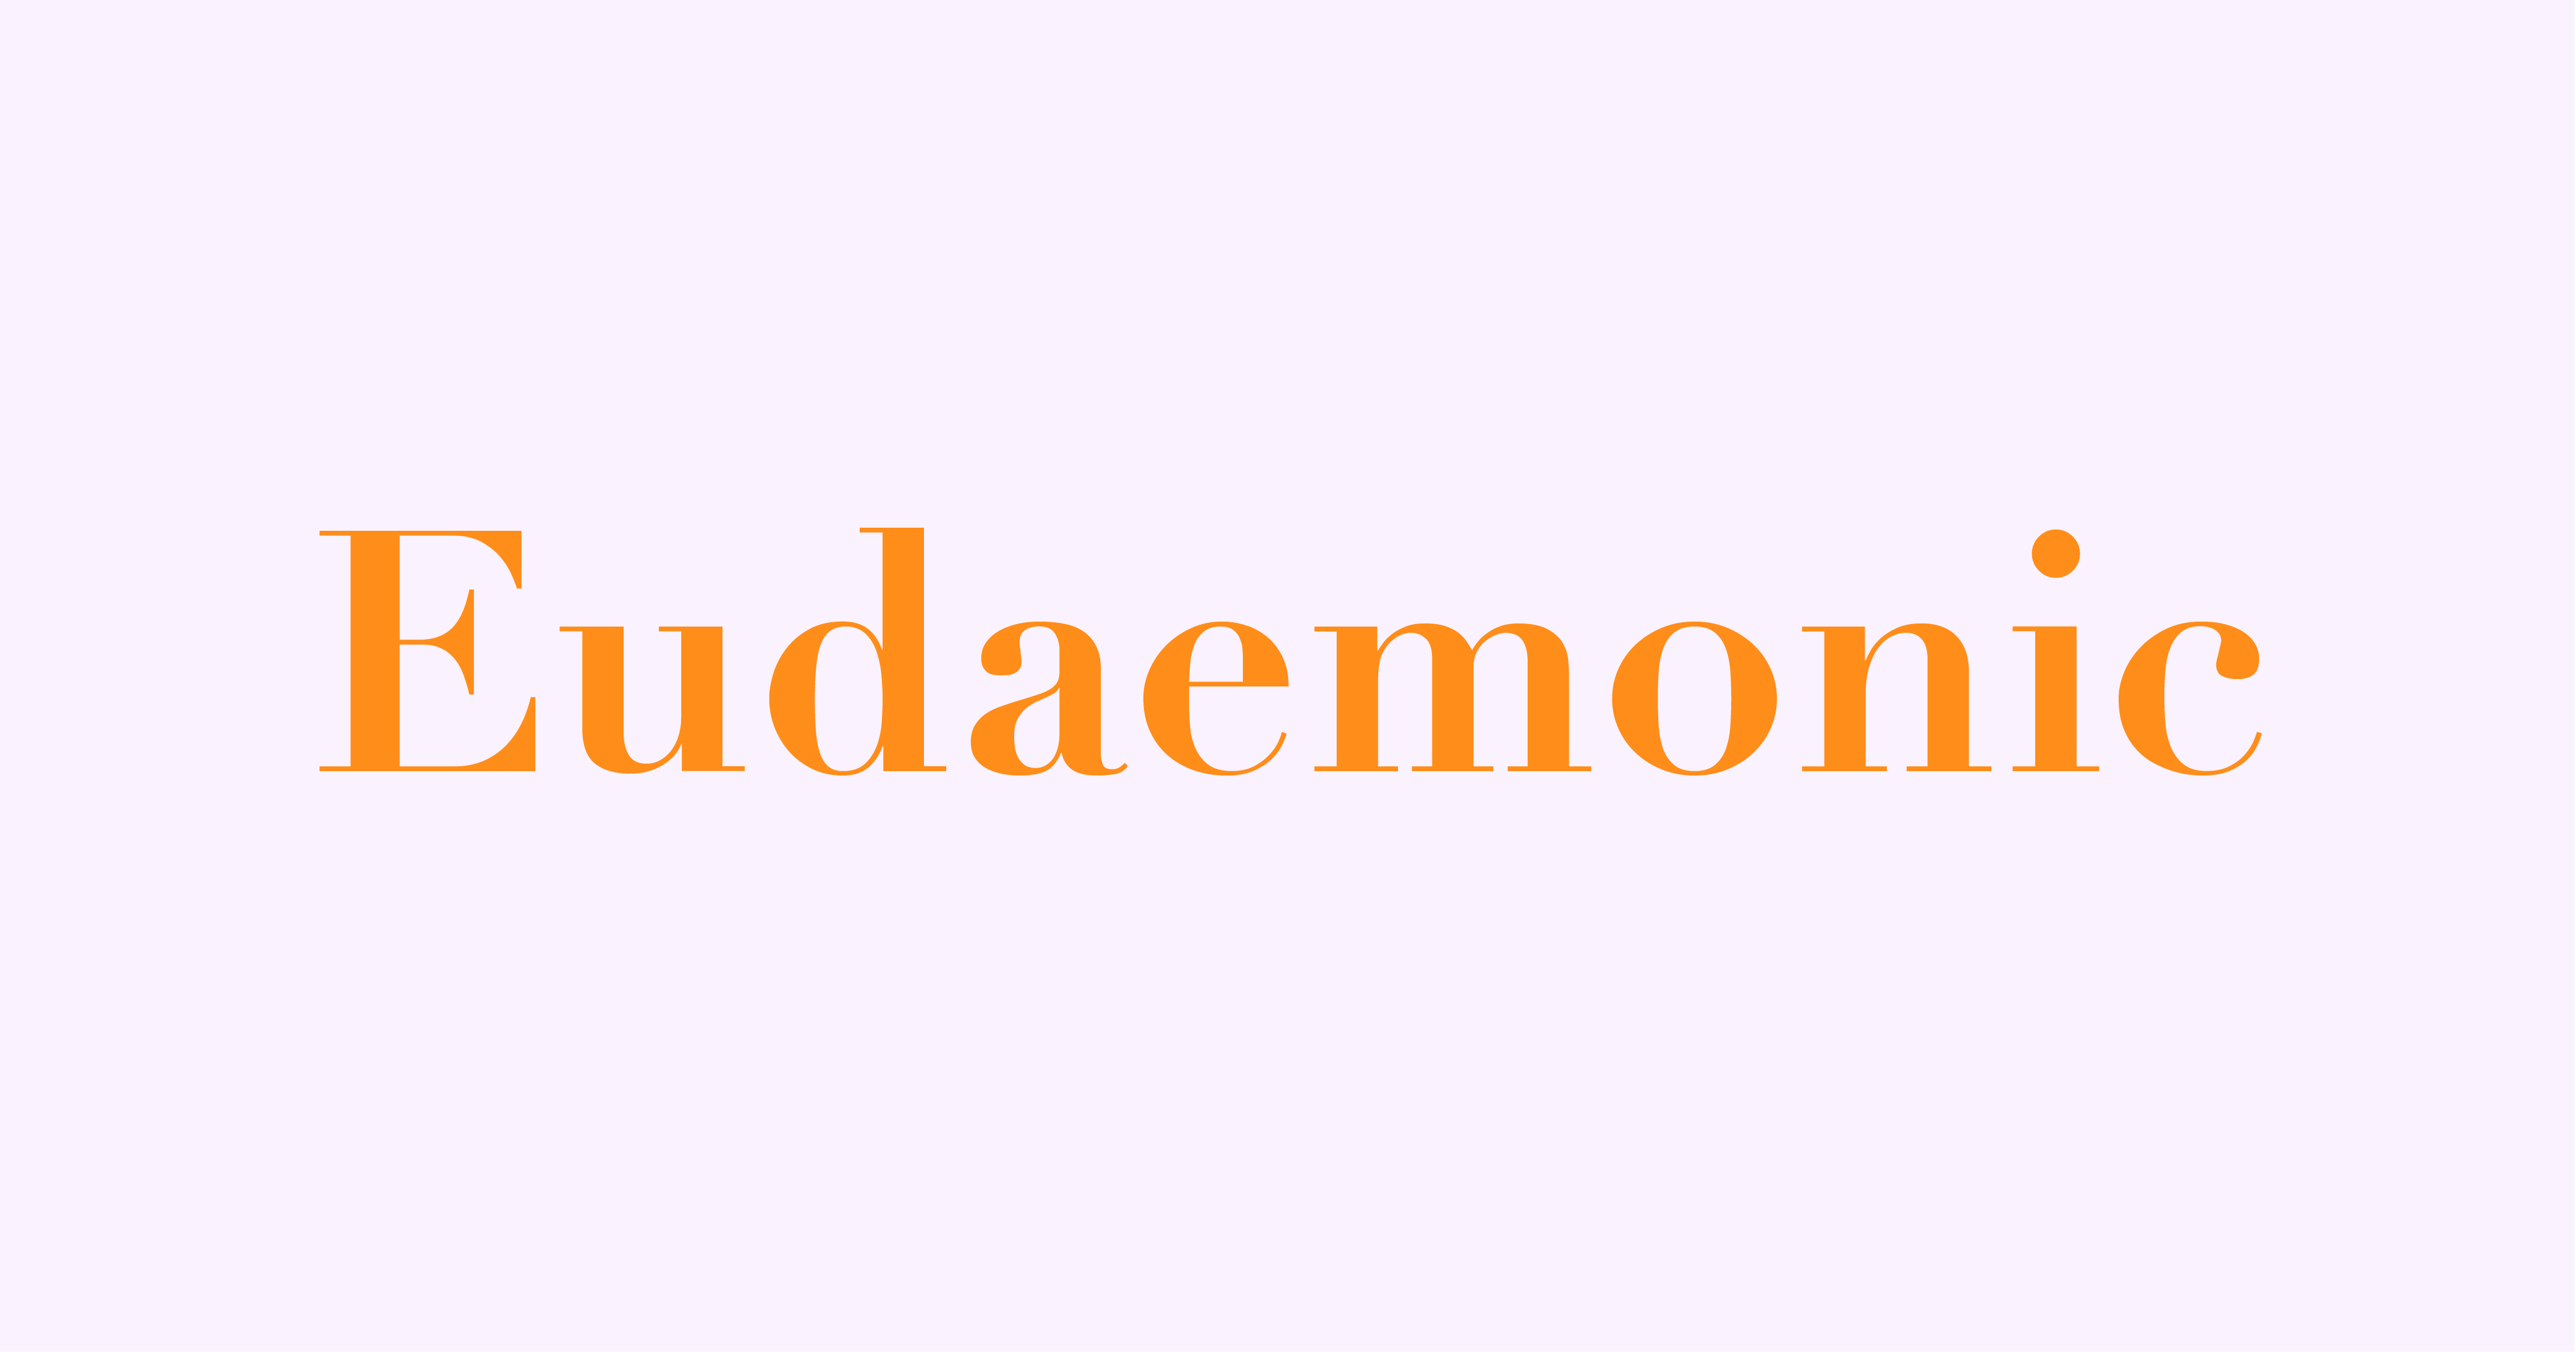 Eudaemonic